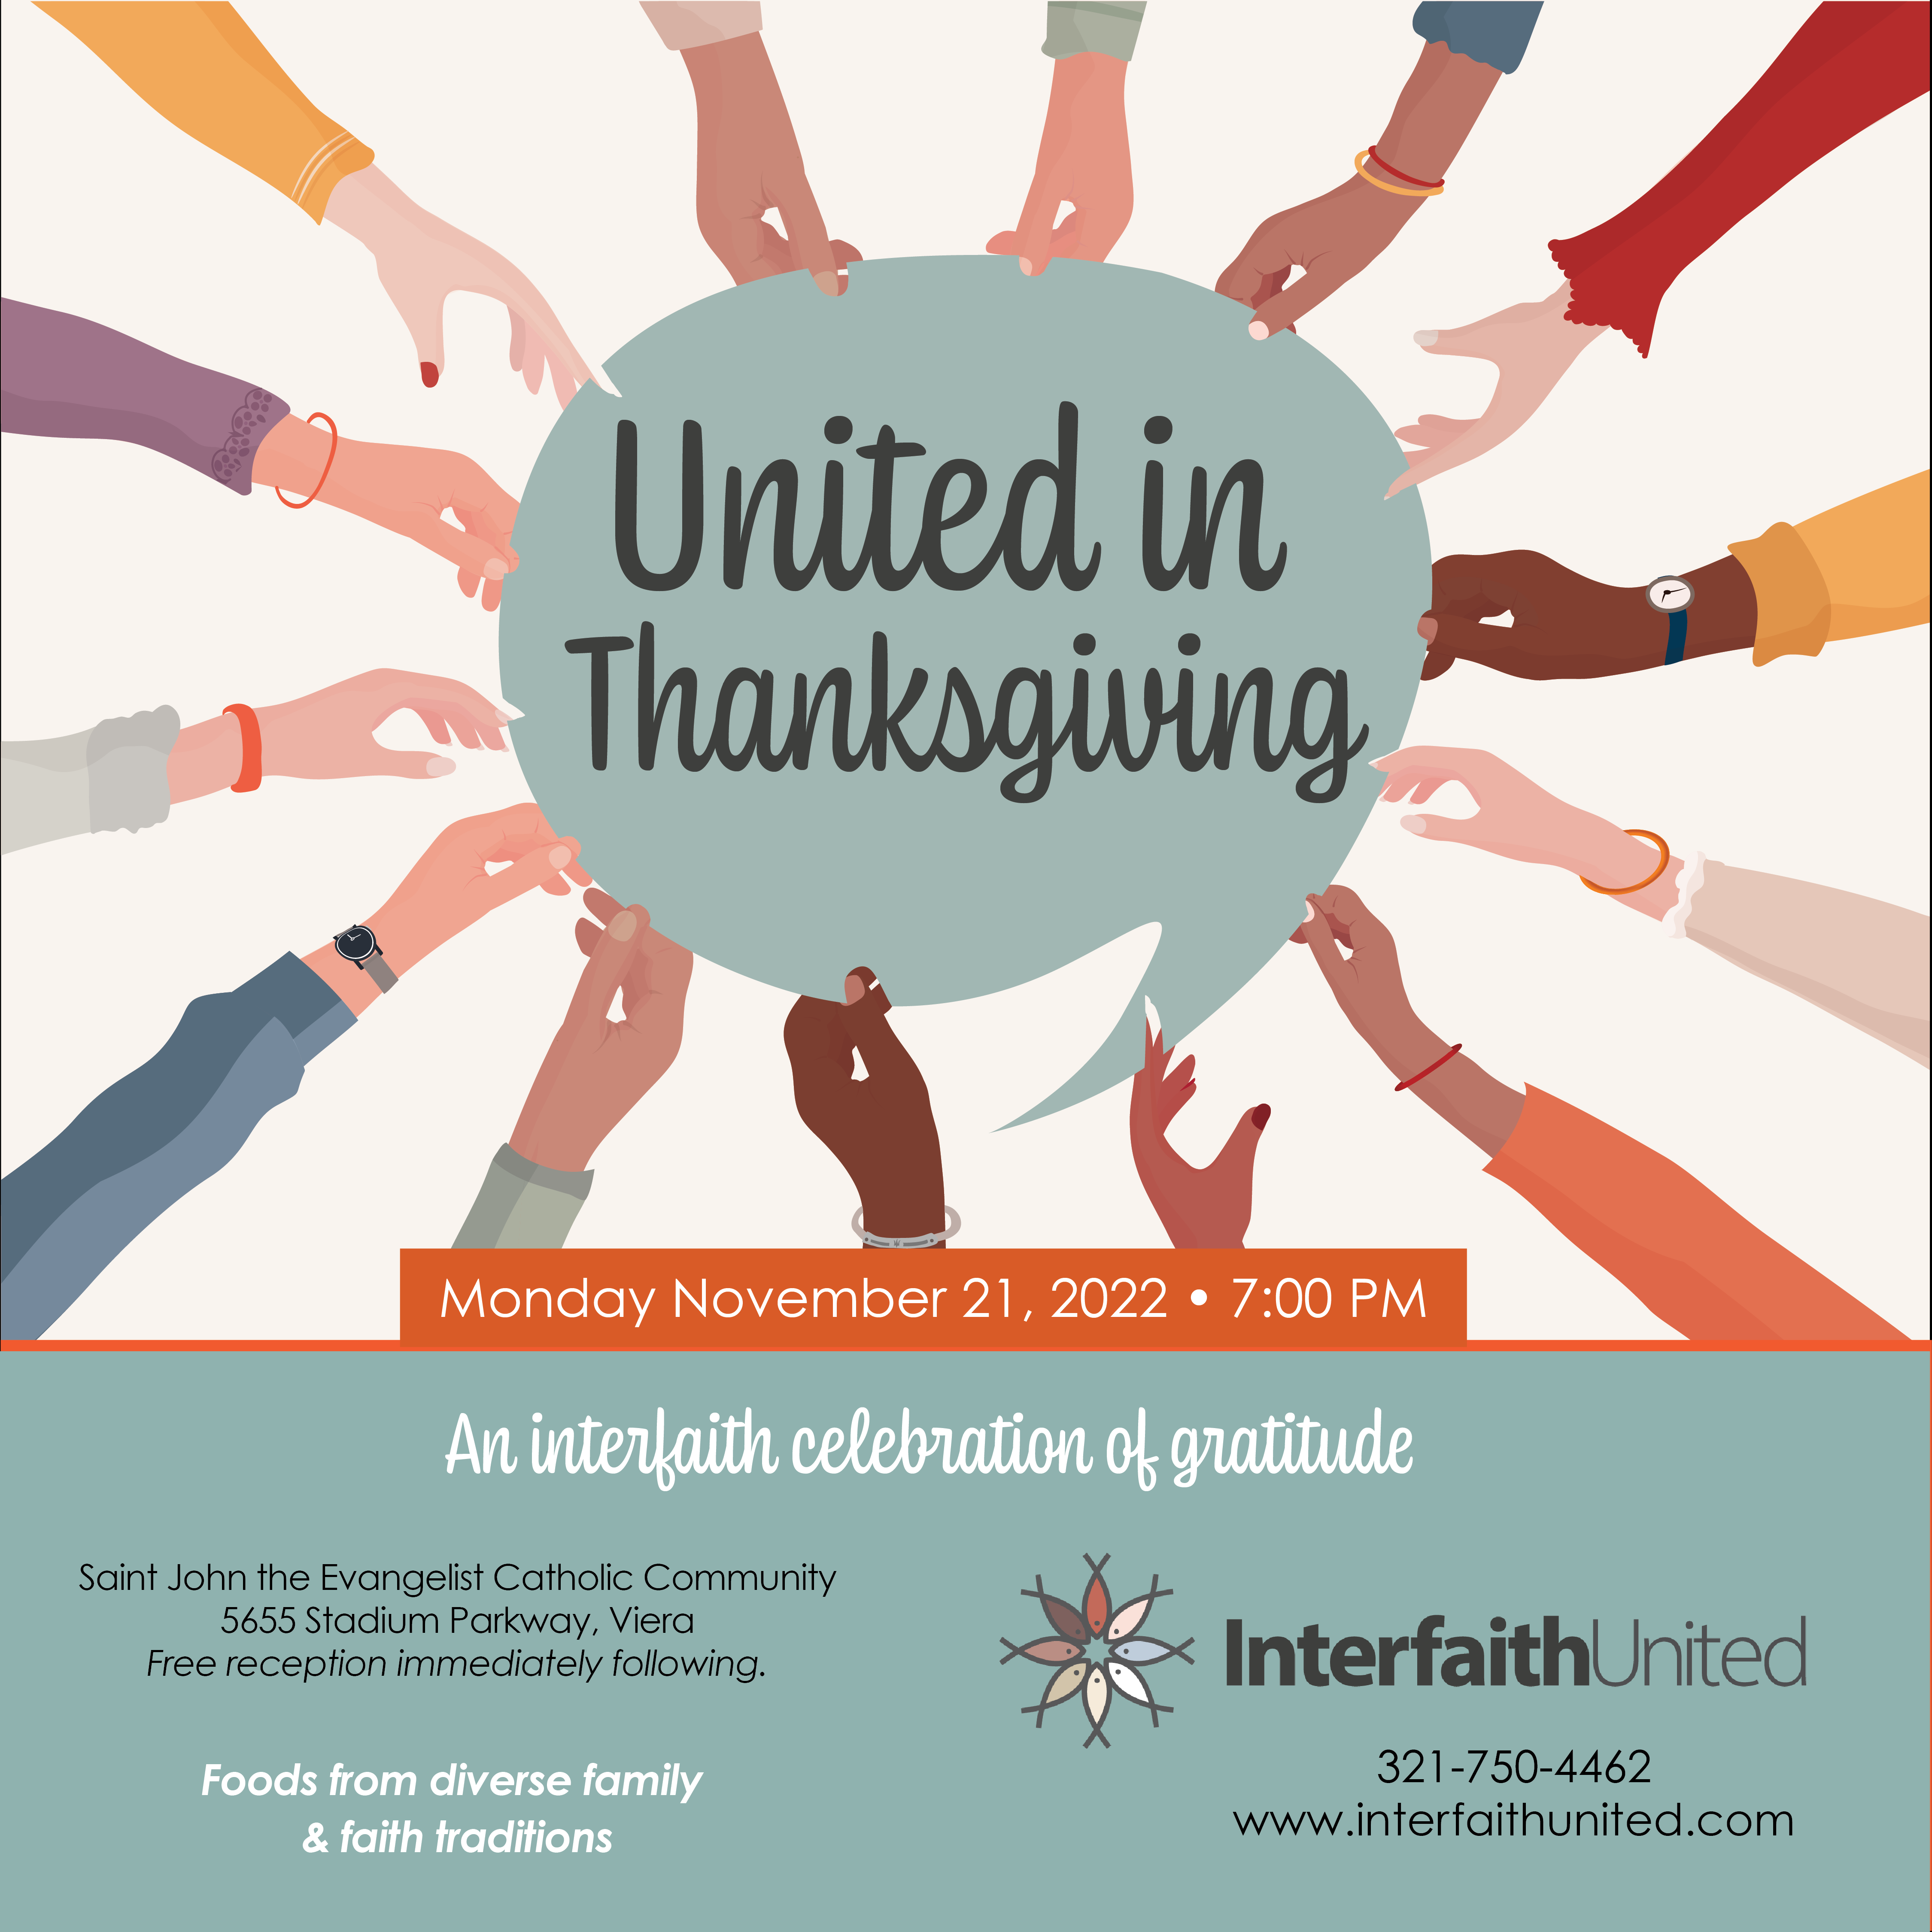 United in Thanksgiving Monday November 21, 2022- 7pm at Saint John the Evangelist Church 5655 Stadium Parkway, Viera